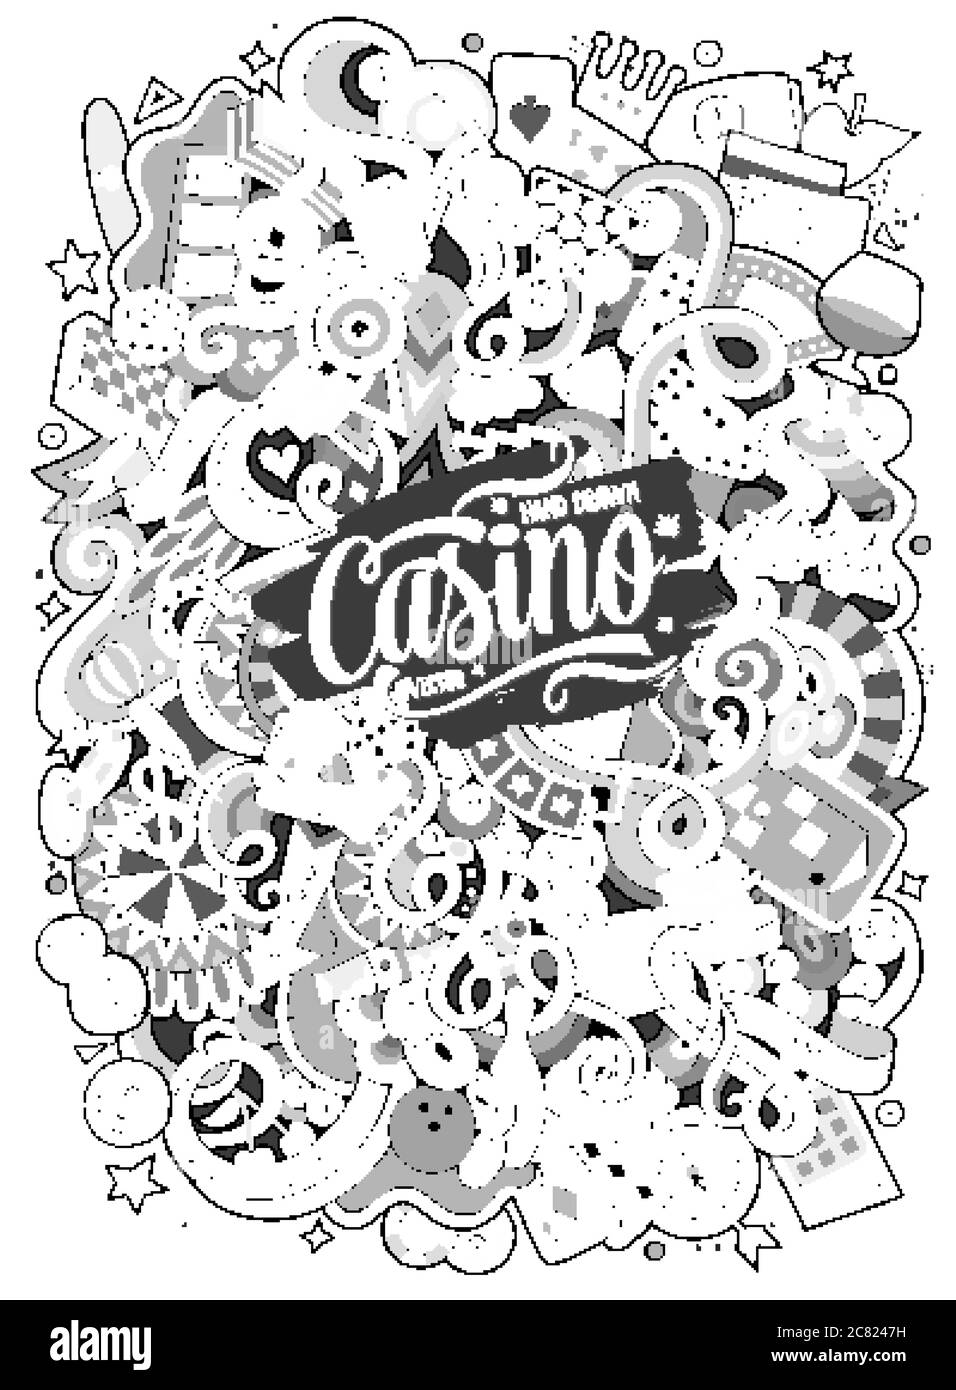 Cartoon hand-drawn doodles casino, gambling illustration Stock Vector